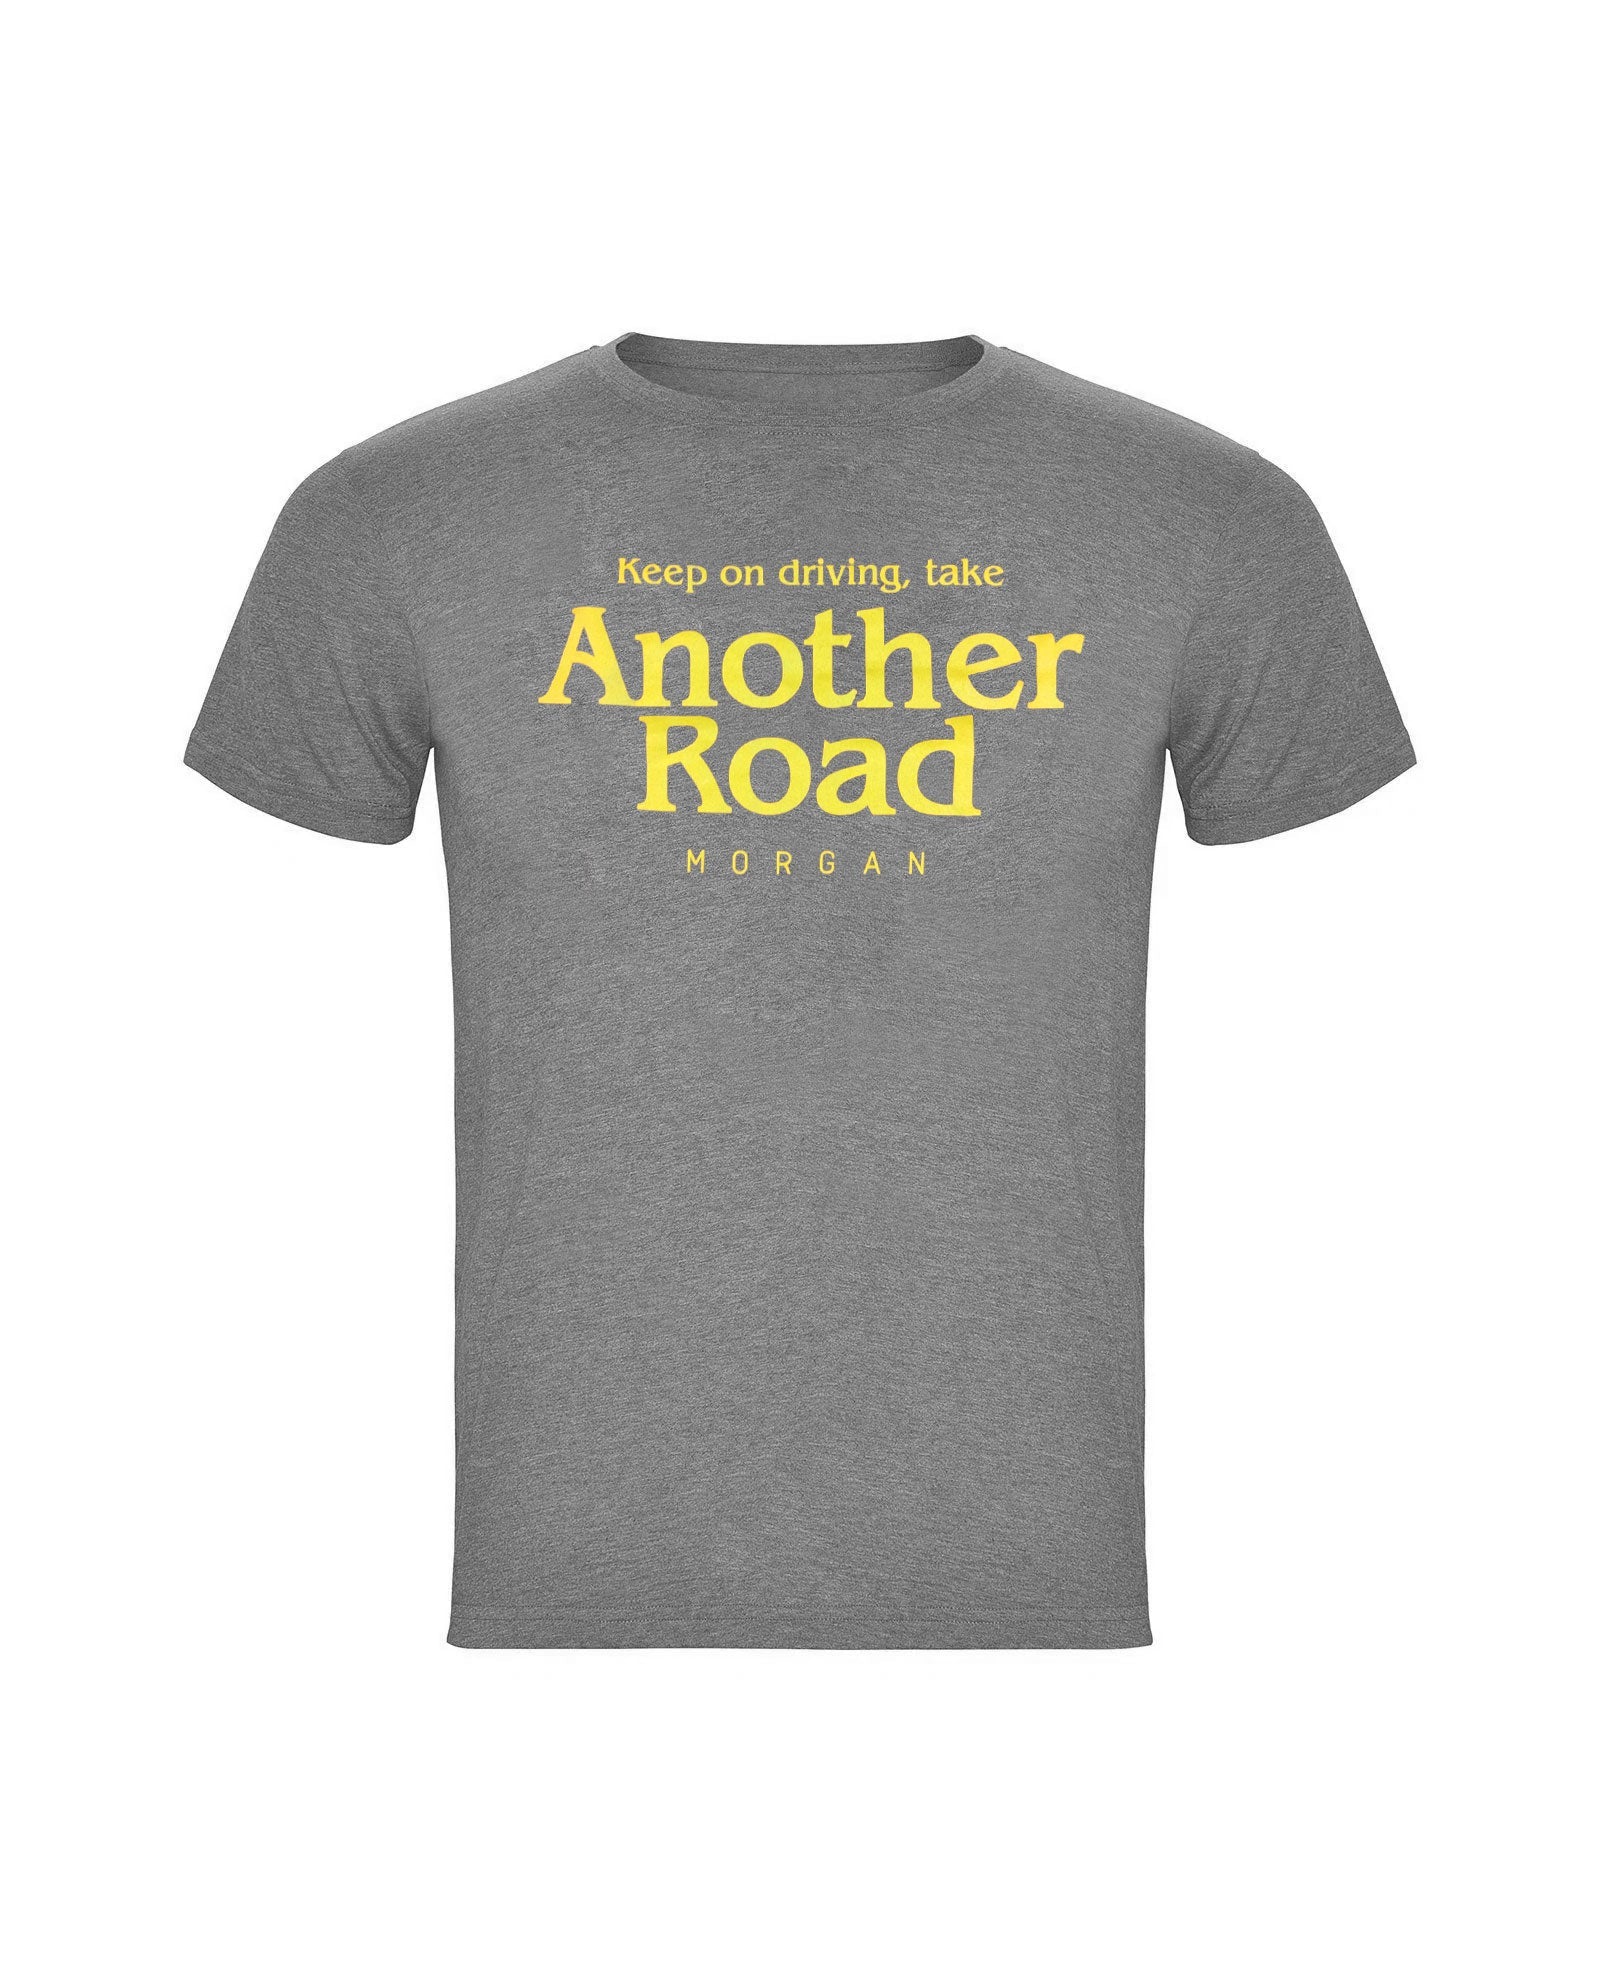 Camiseta Another Road - Gris Unisex - Rocktud - Morgan